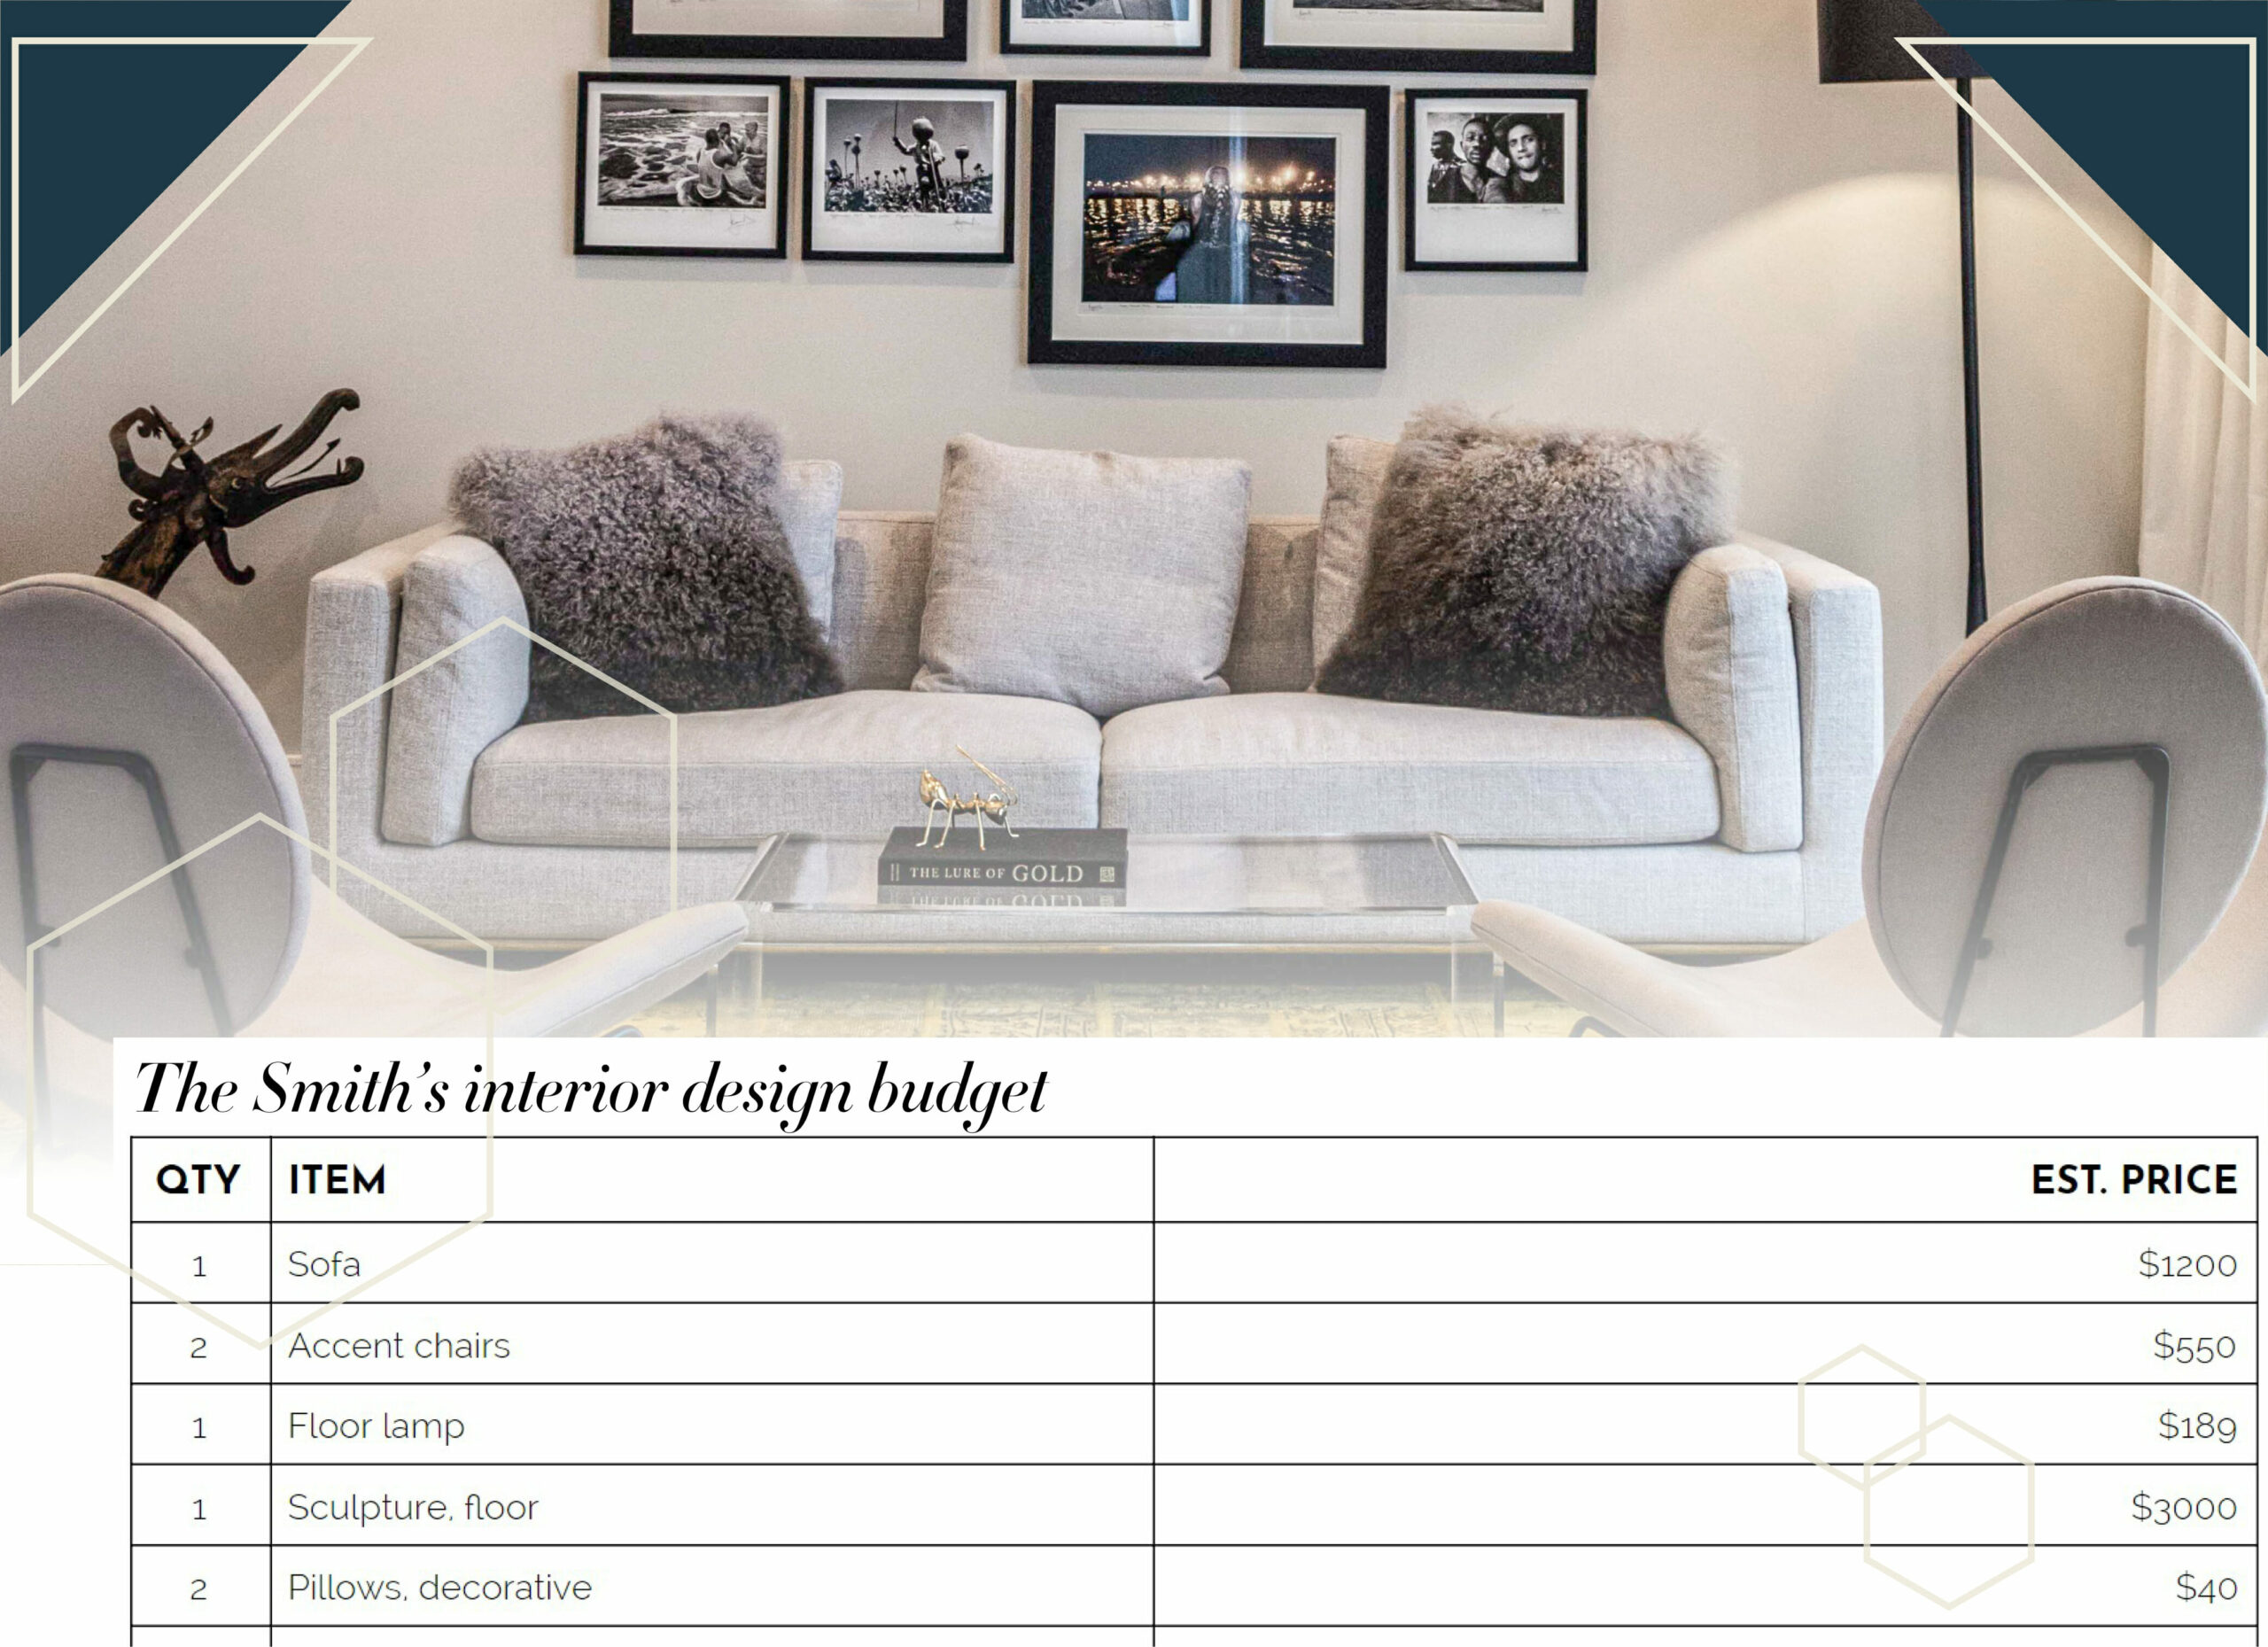 How to set your interior design budget: Part 1